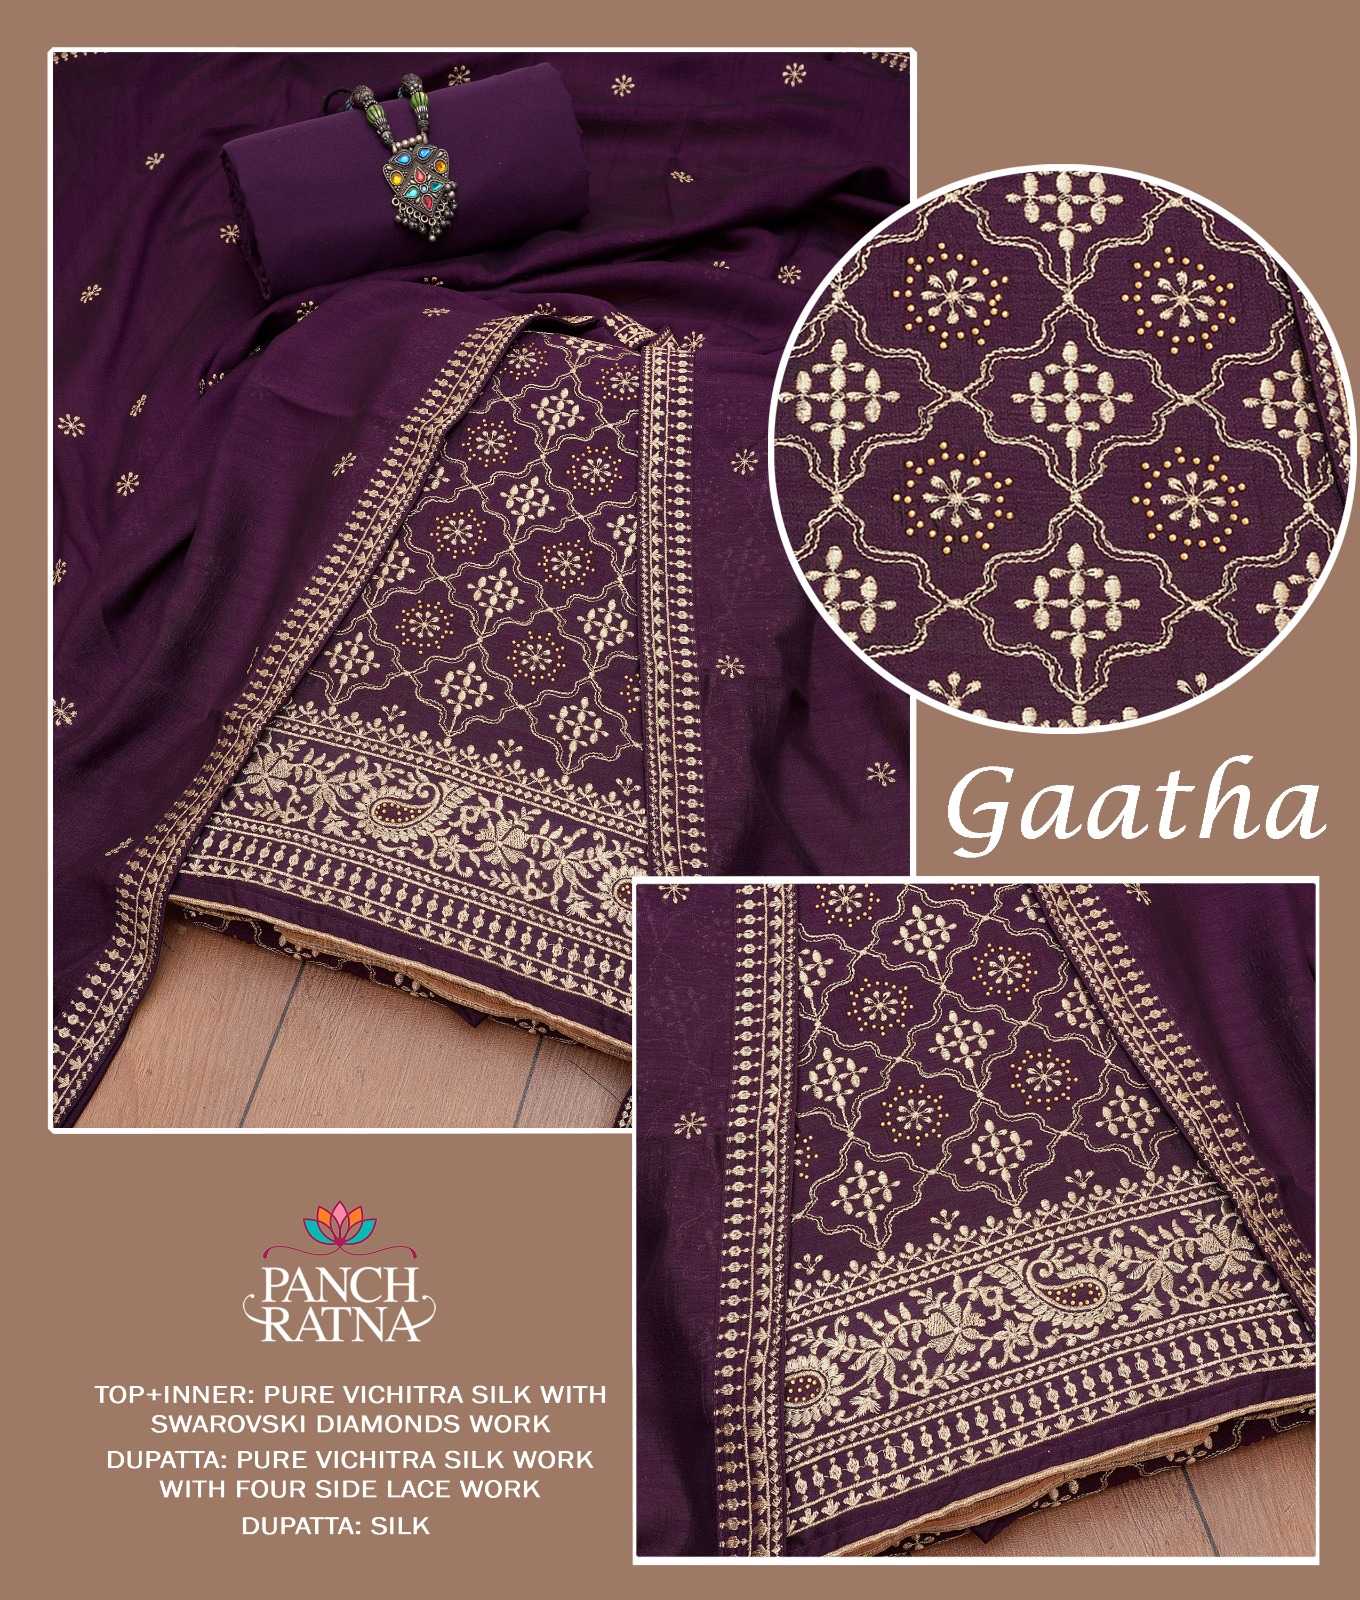 panch ratna gaatha vichitra silk with diamond work unstitch salwar suit